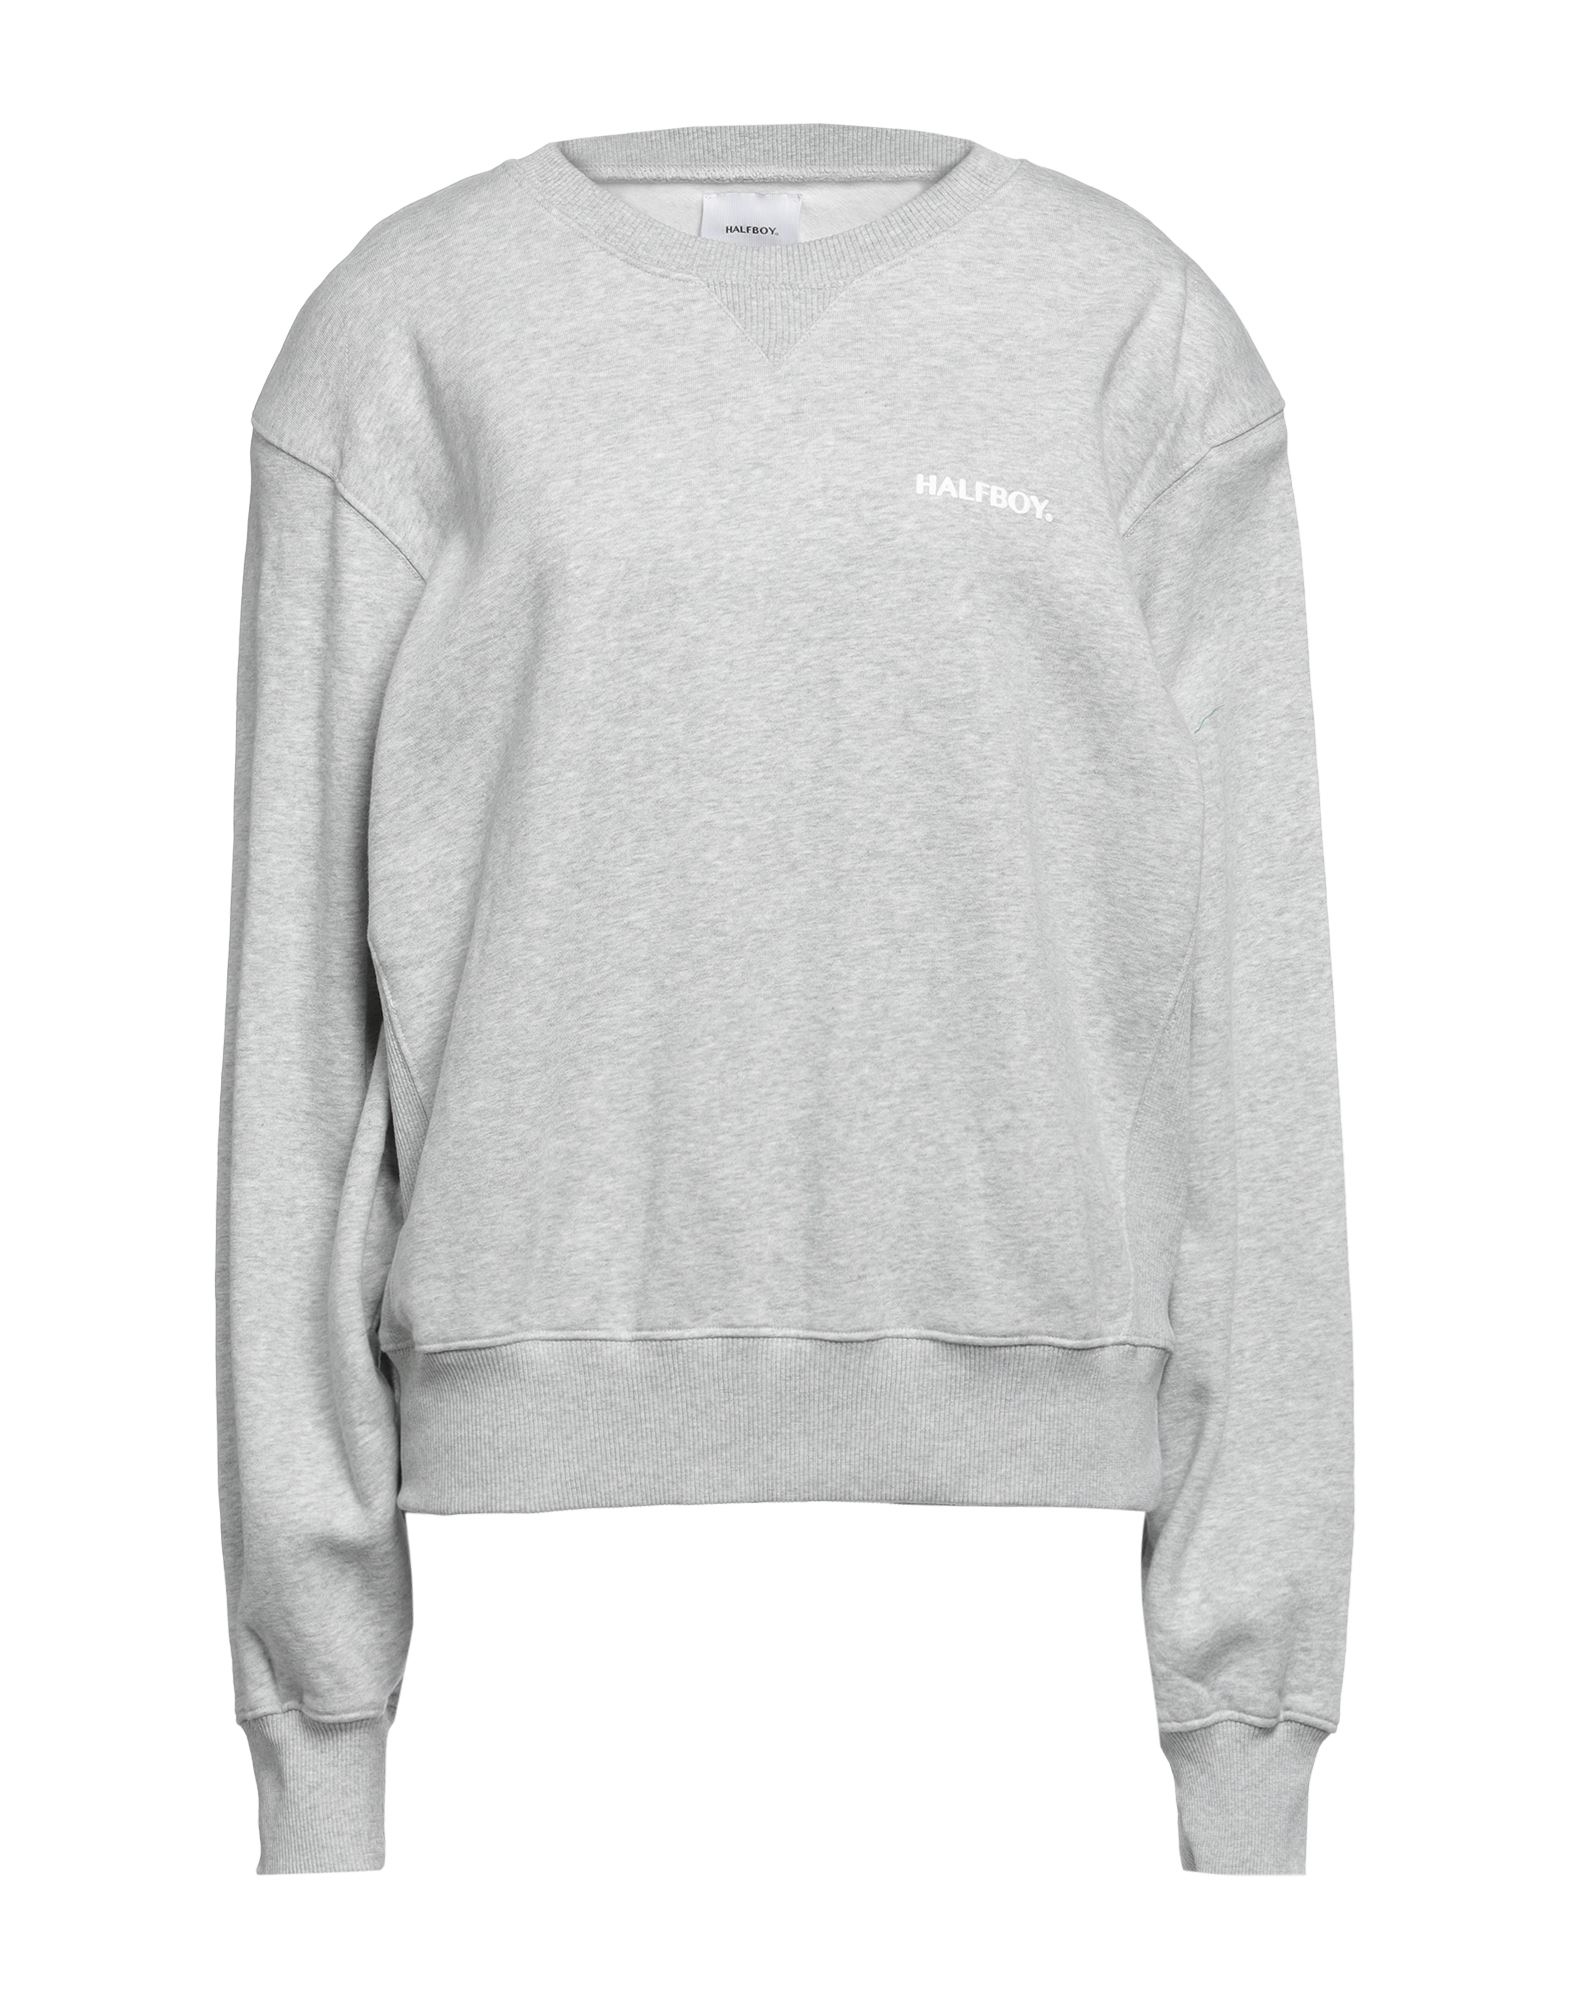 Halfboy Sweatshirts In Grey